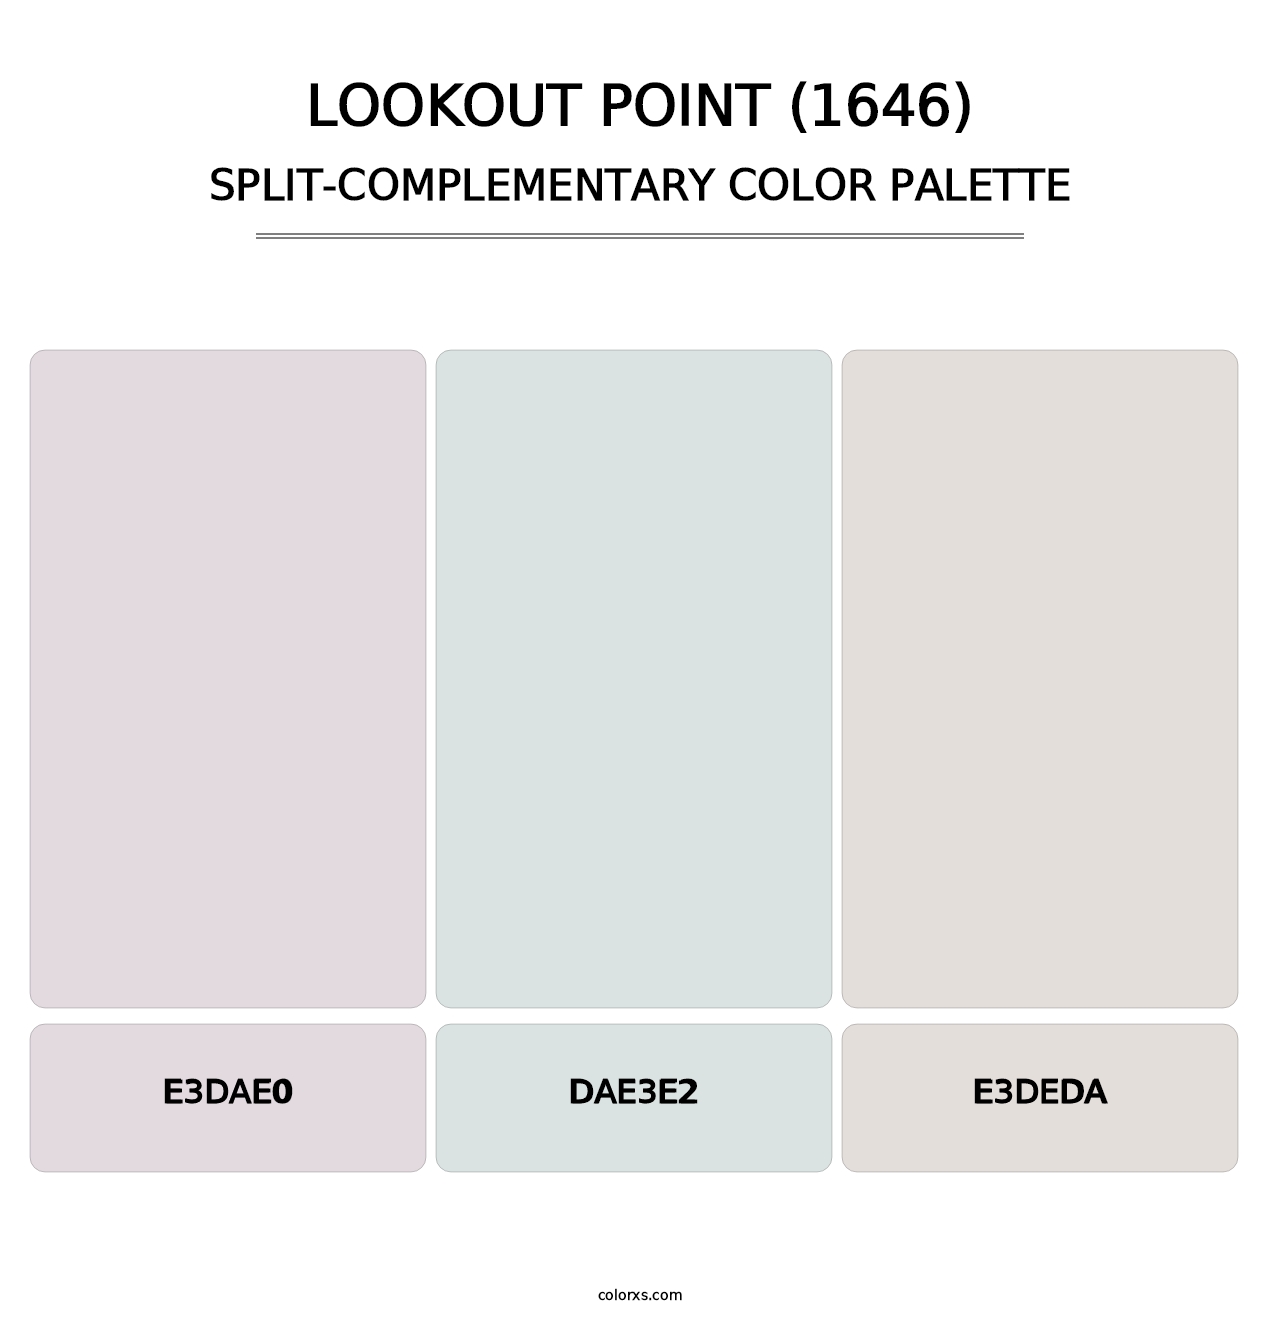 Lookout Point (1646) - Split-Complementary Color Palette